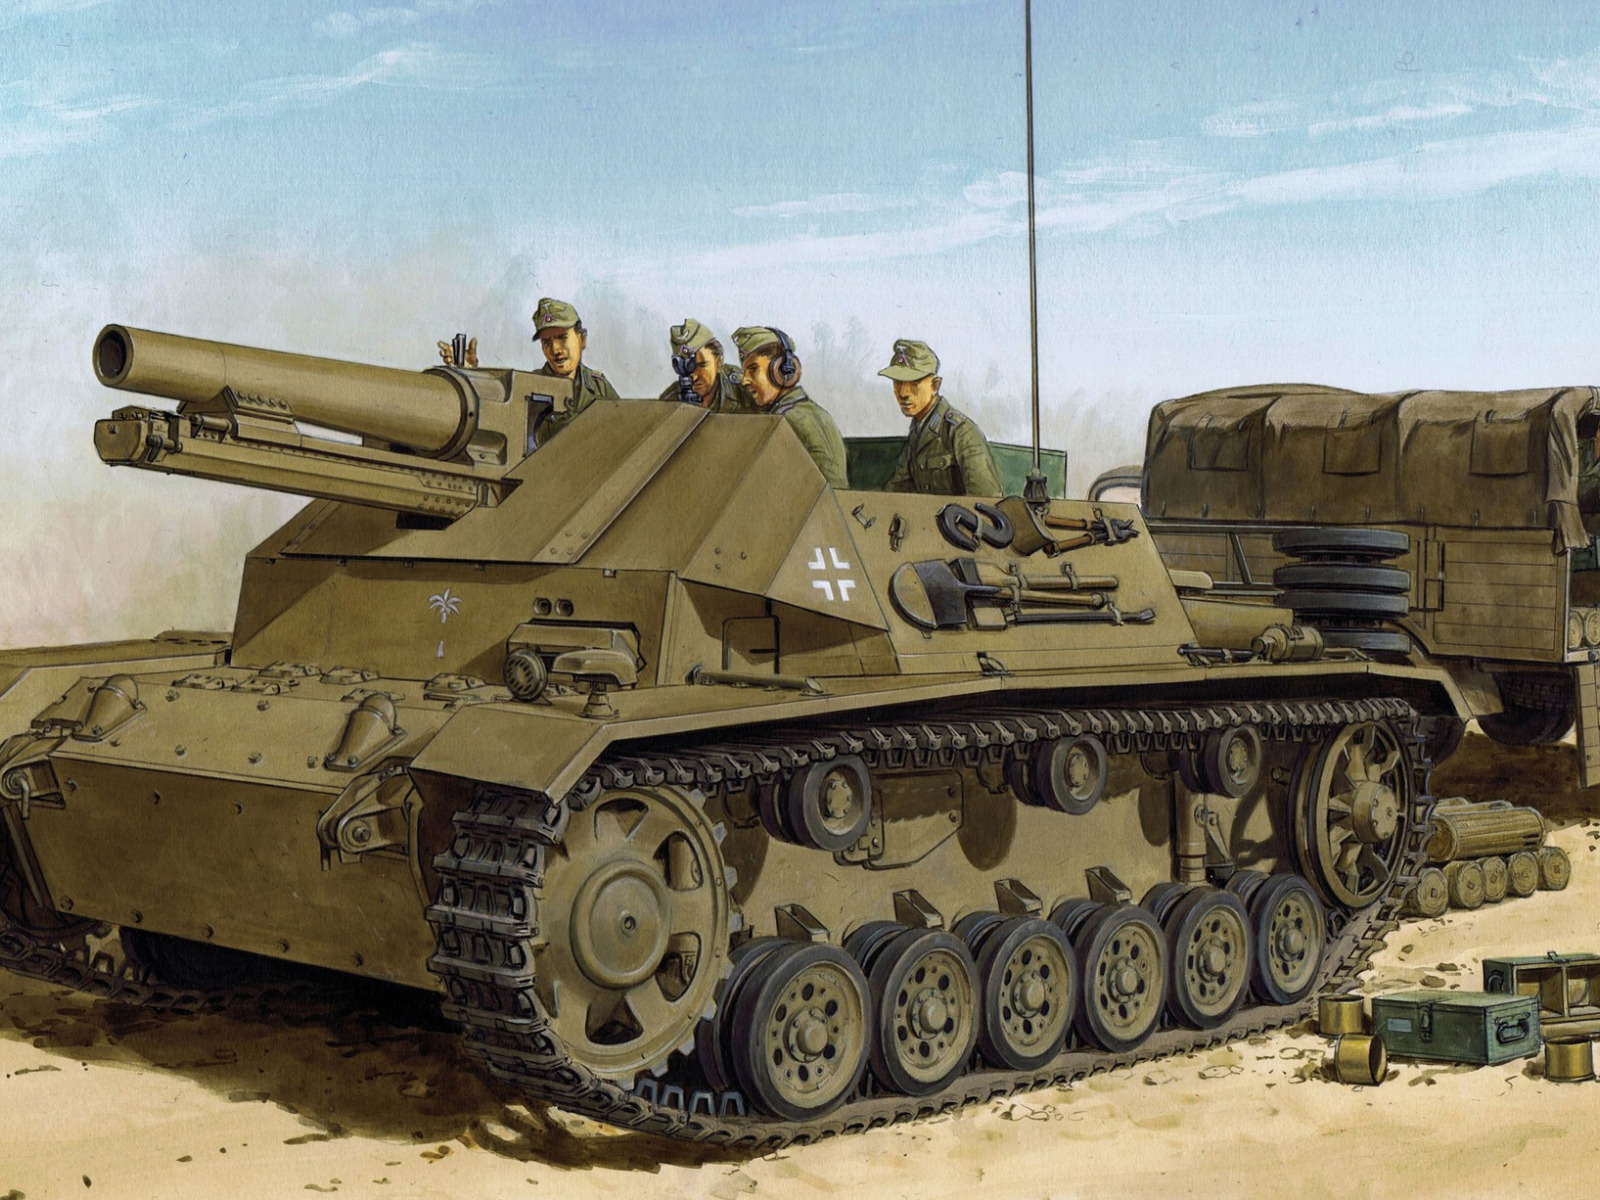 Пушки немецких танков. 15 Cm sig 33 auf FGST. PZ.Kpfw.III (SF). PZ 3 sig 33. САУ 15 cm sig 33 auf PZ.II Sturmpanzer. 15cm sig 33 auf Fahrgestell PZ.Kpfw.III(SF).